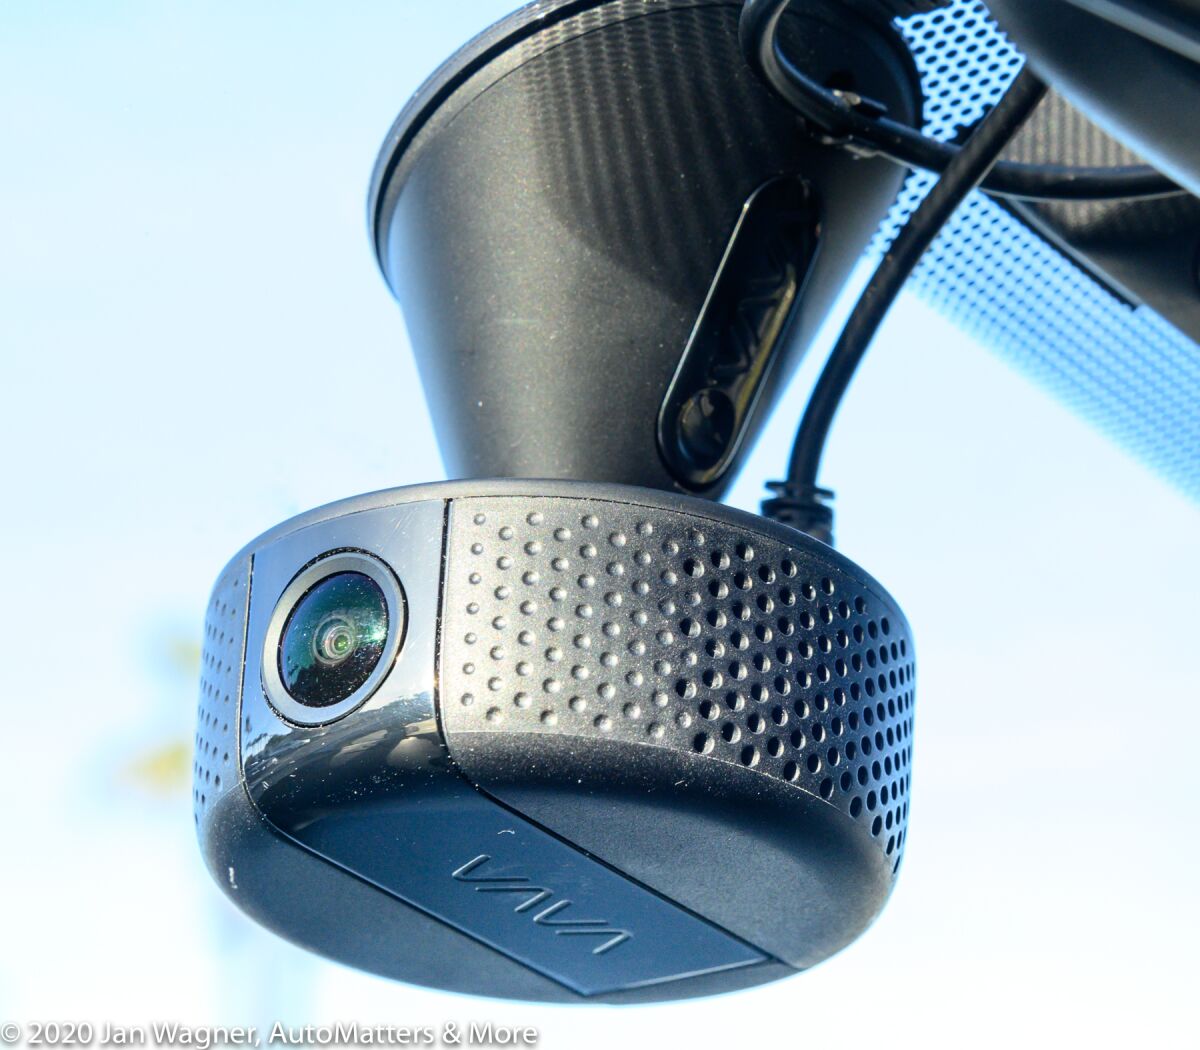 VAVA 4K dash cam mounted on windshield